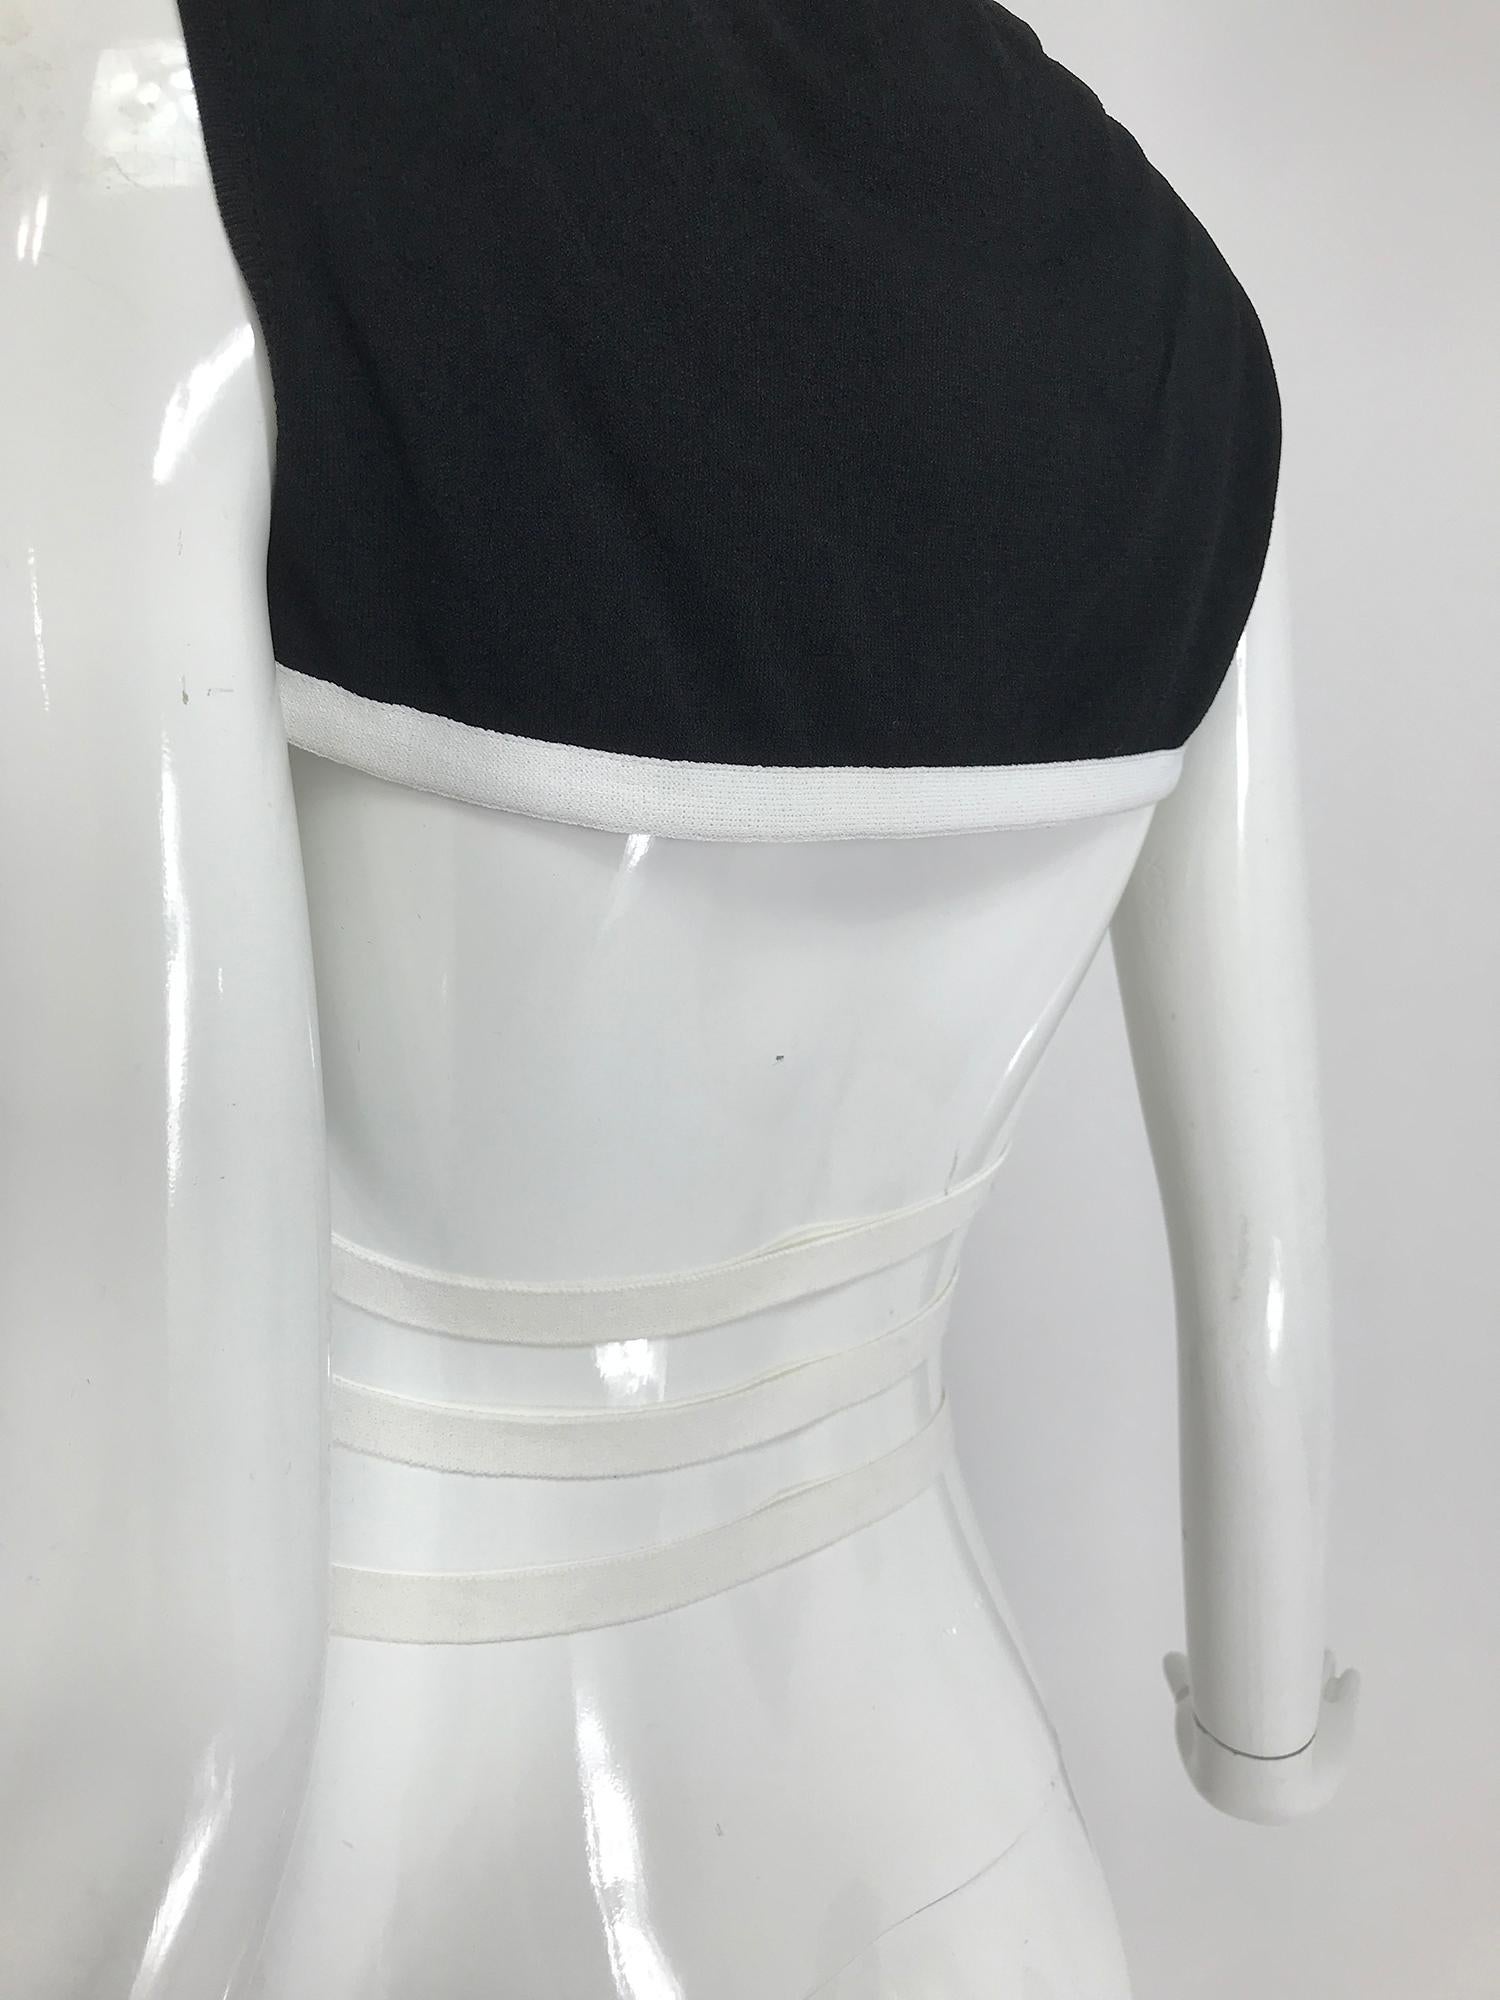 Moschino Black & White Stripe Knit Bare Back Top 2